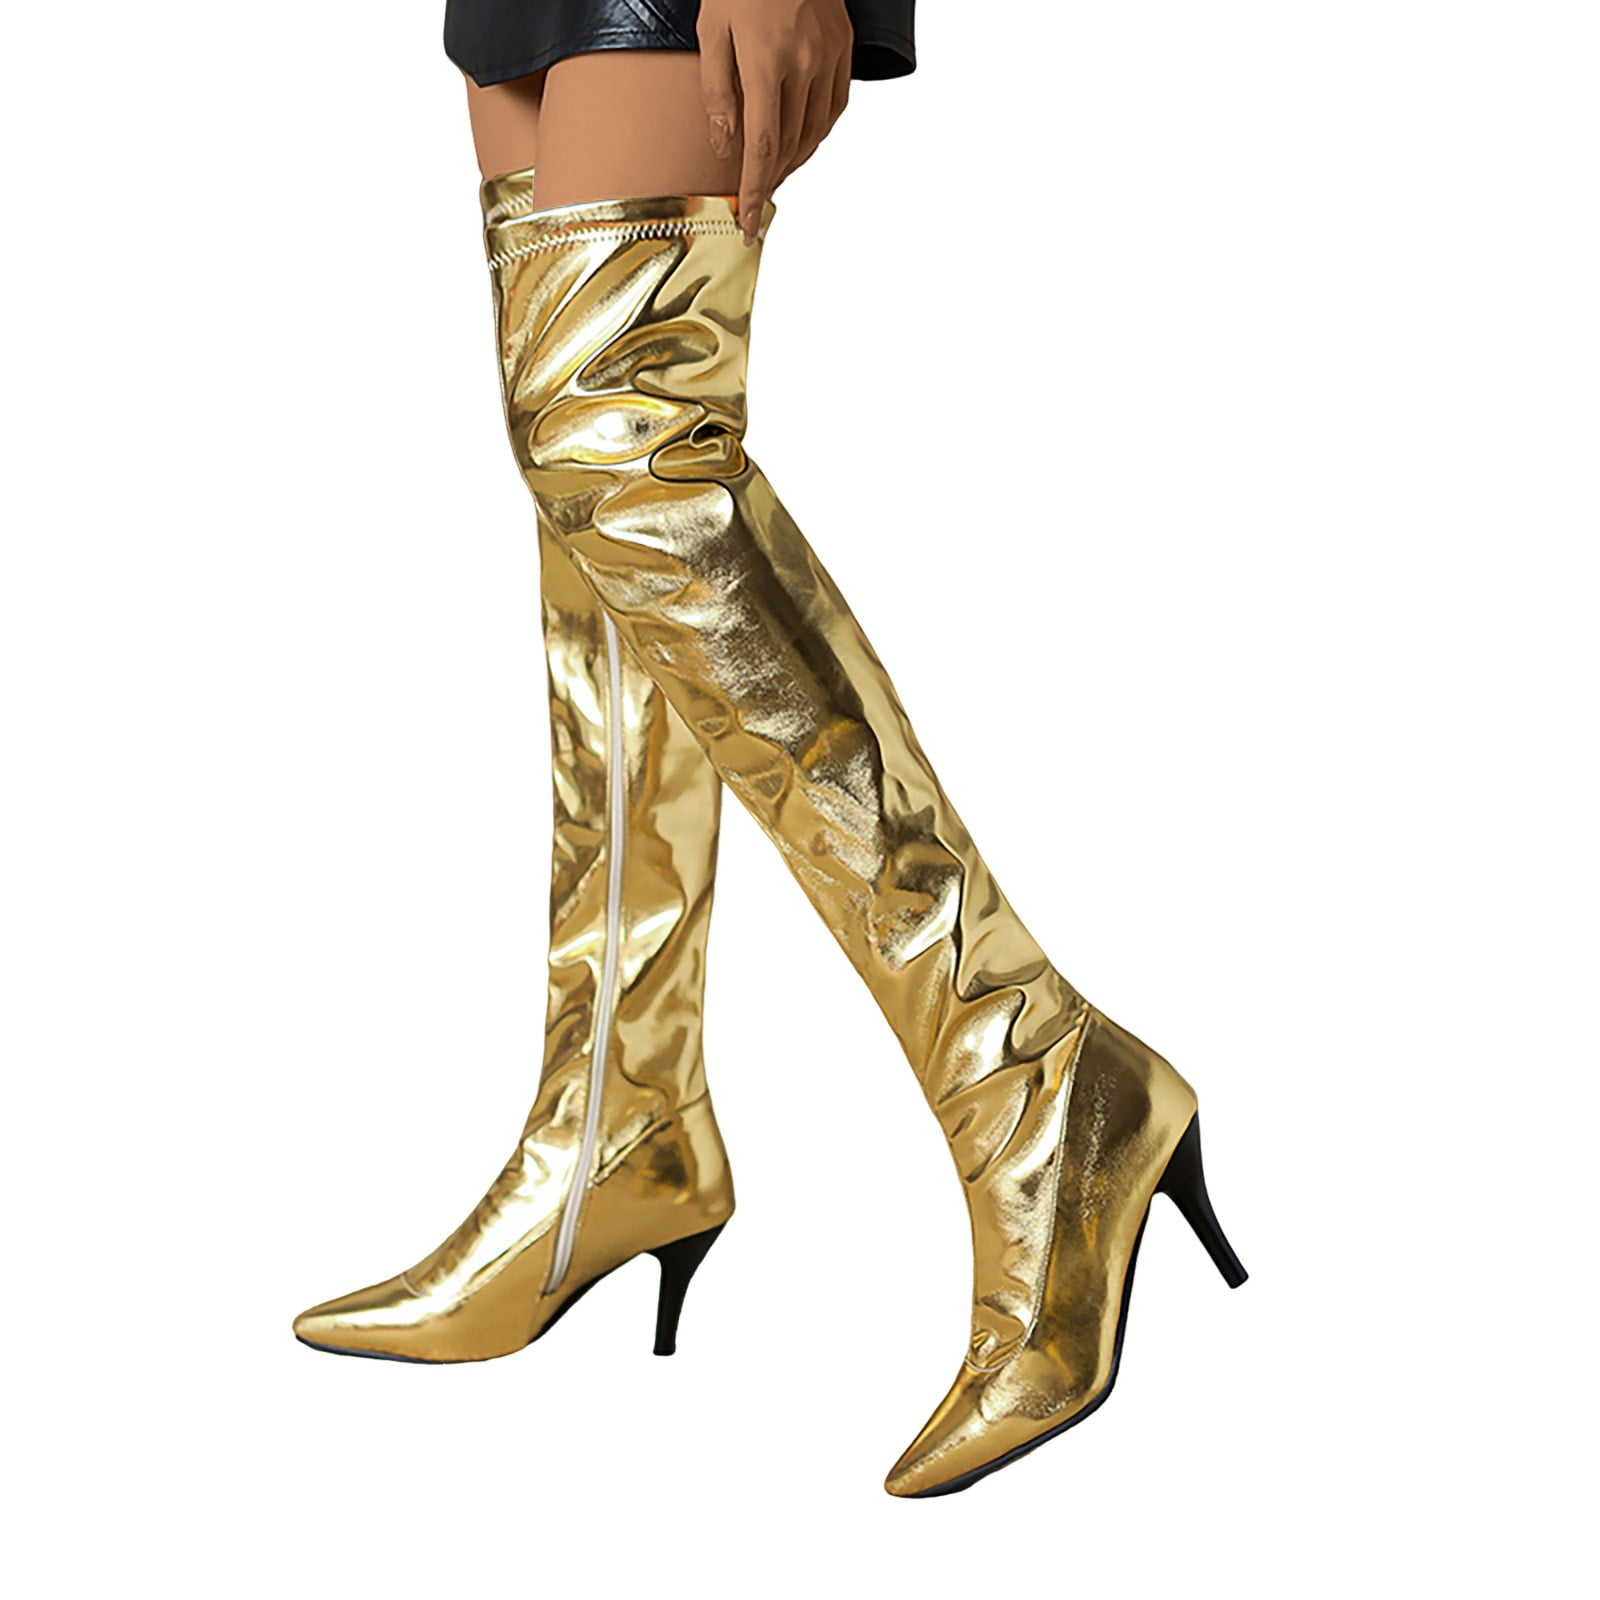 JDEFEG Nightclub Fashion High Heel Boots for Women Metal Style